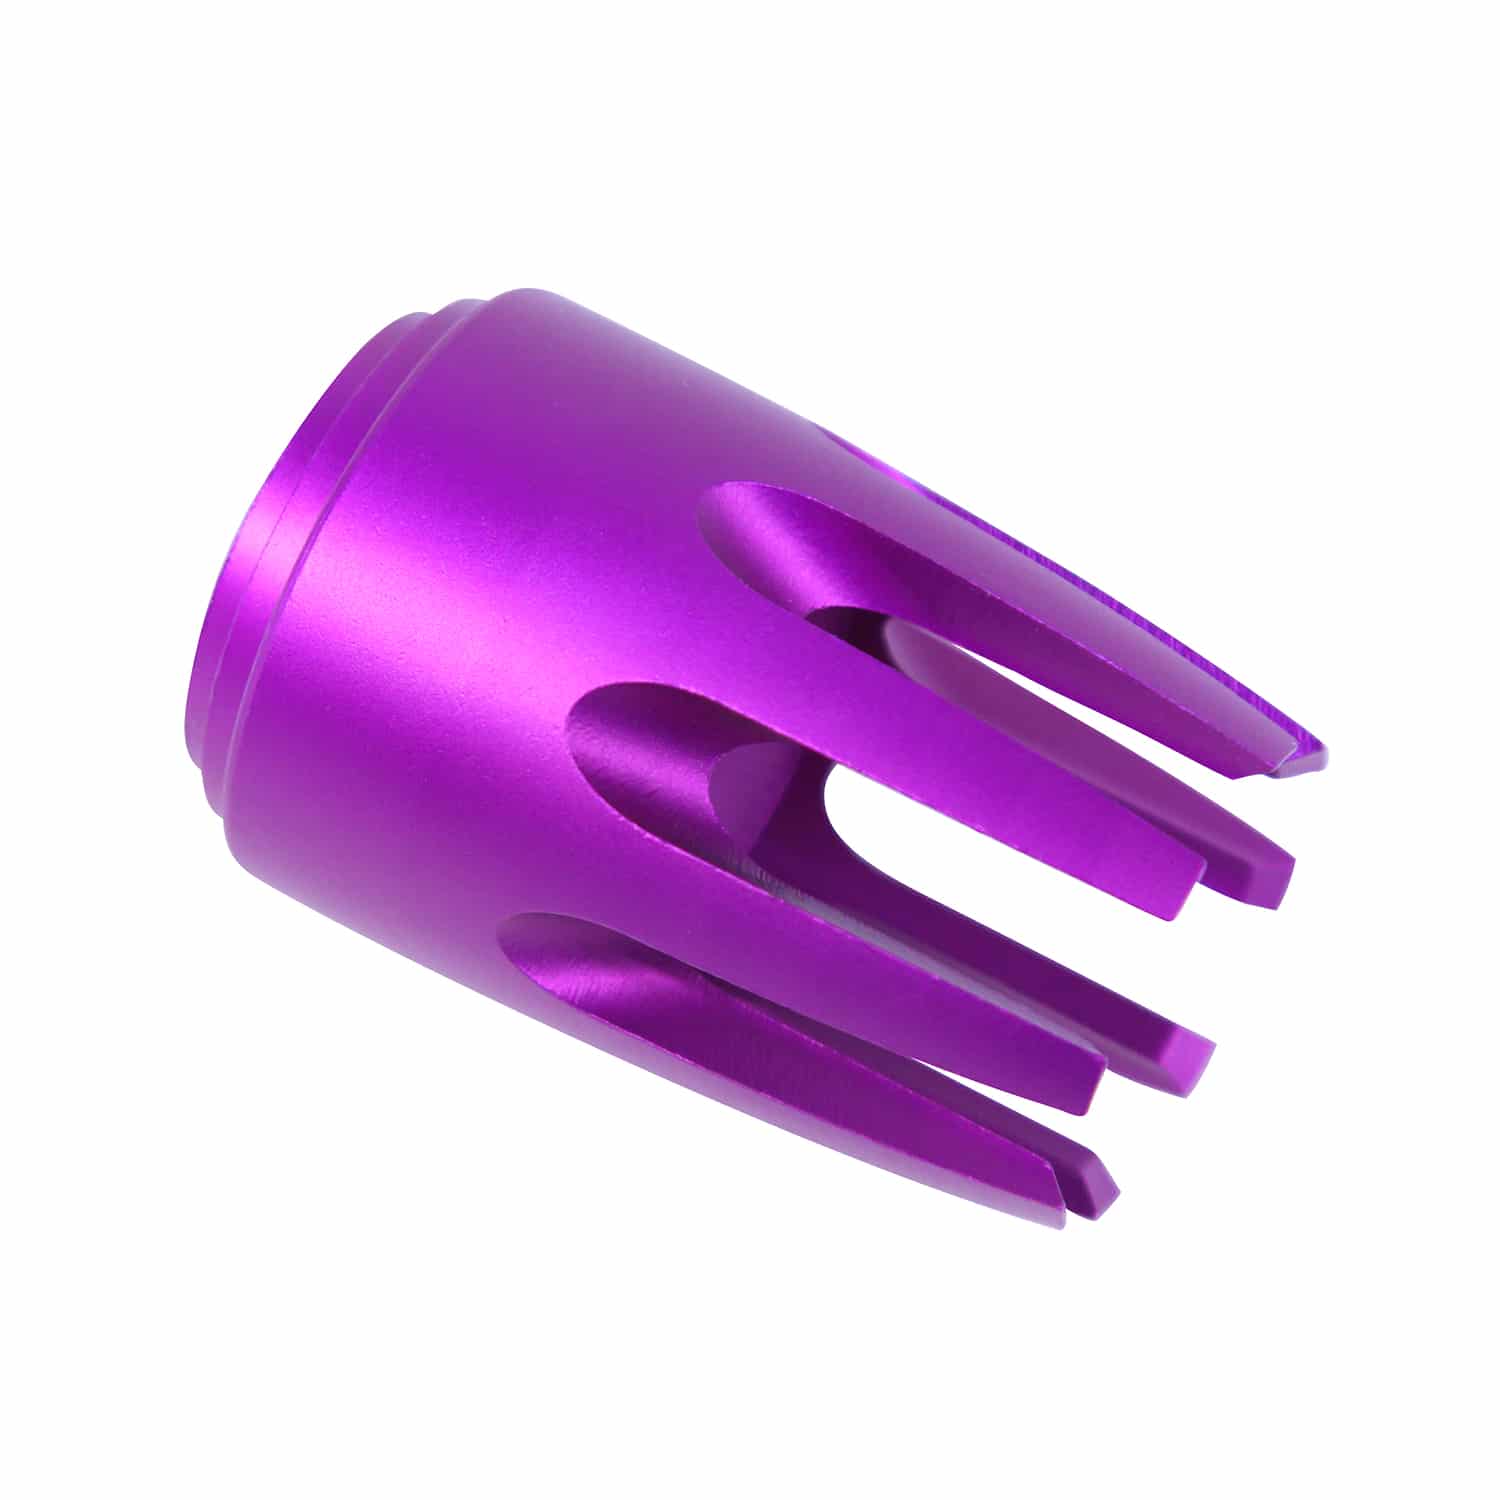 AR15 'Claw' multi-prong flash hider in striking anodized purple